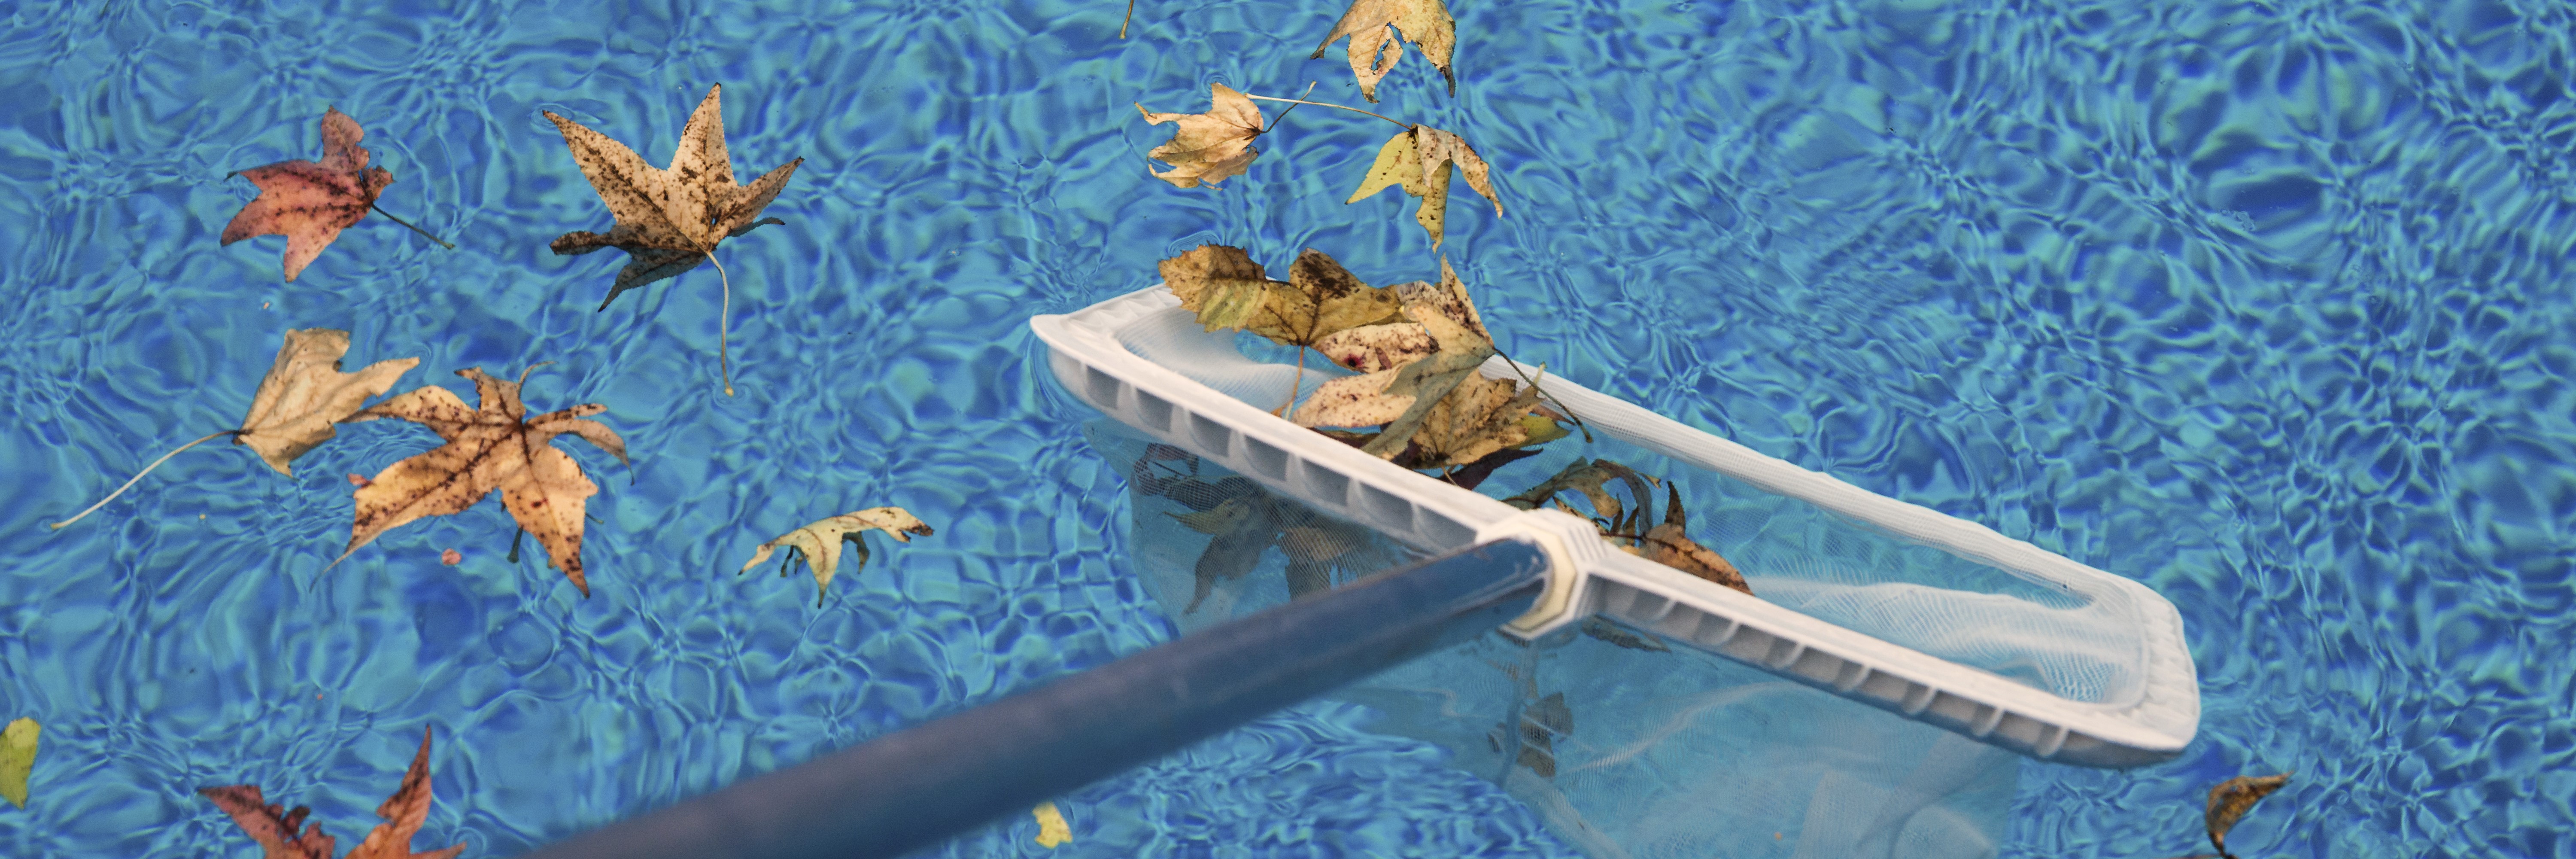 skimming leaves on a pool